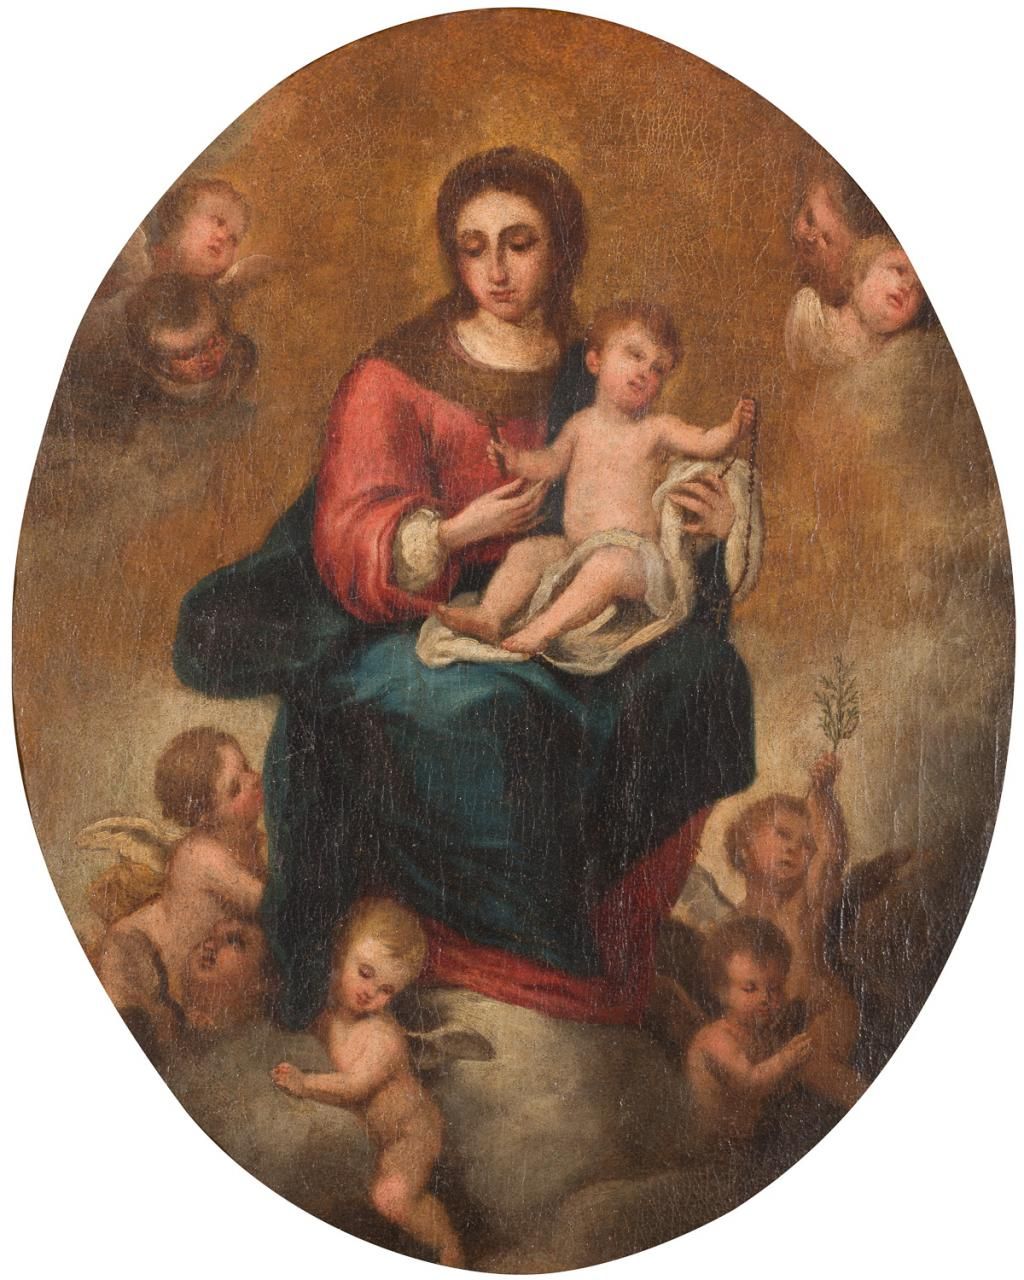 ESCUELA ESPAÑOLA S. XVIII 玫瑰圣母
布面油画
50,5 x 41 cm